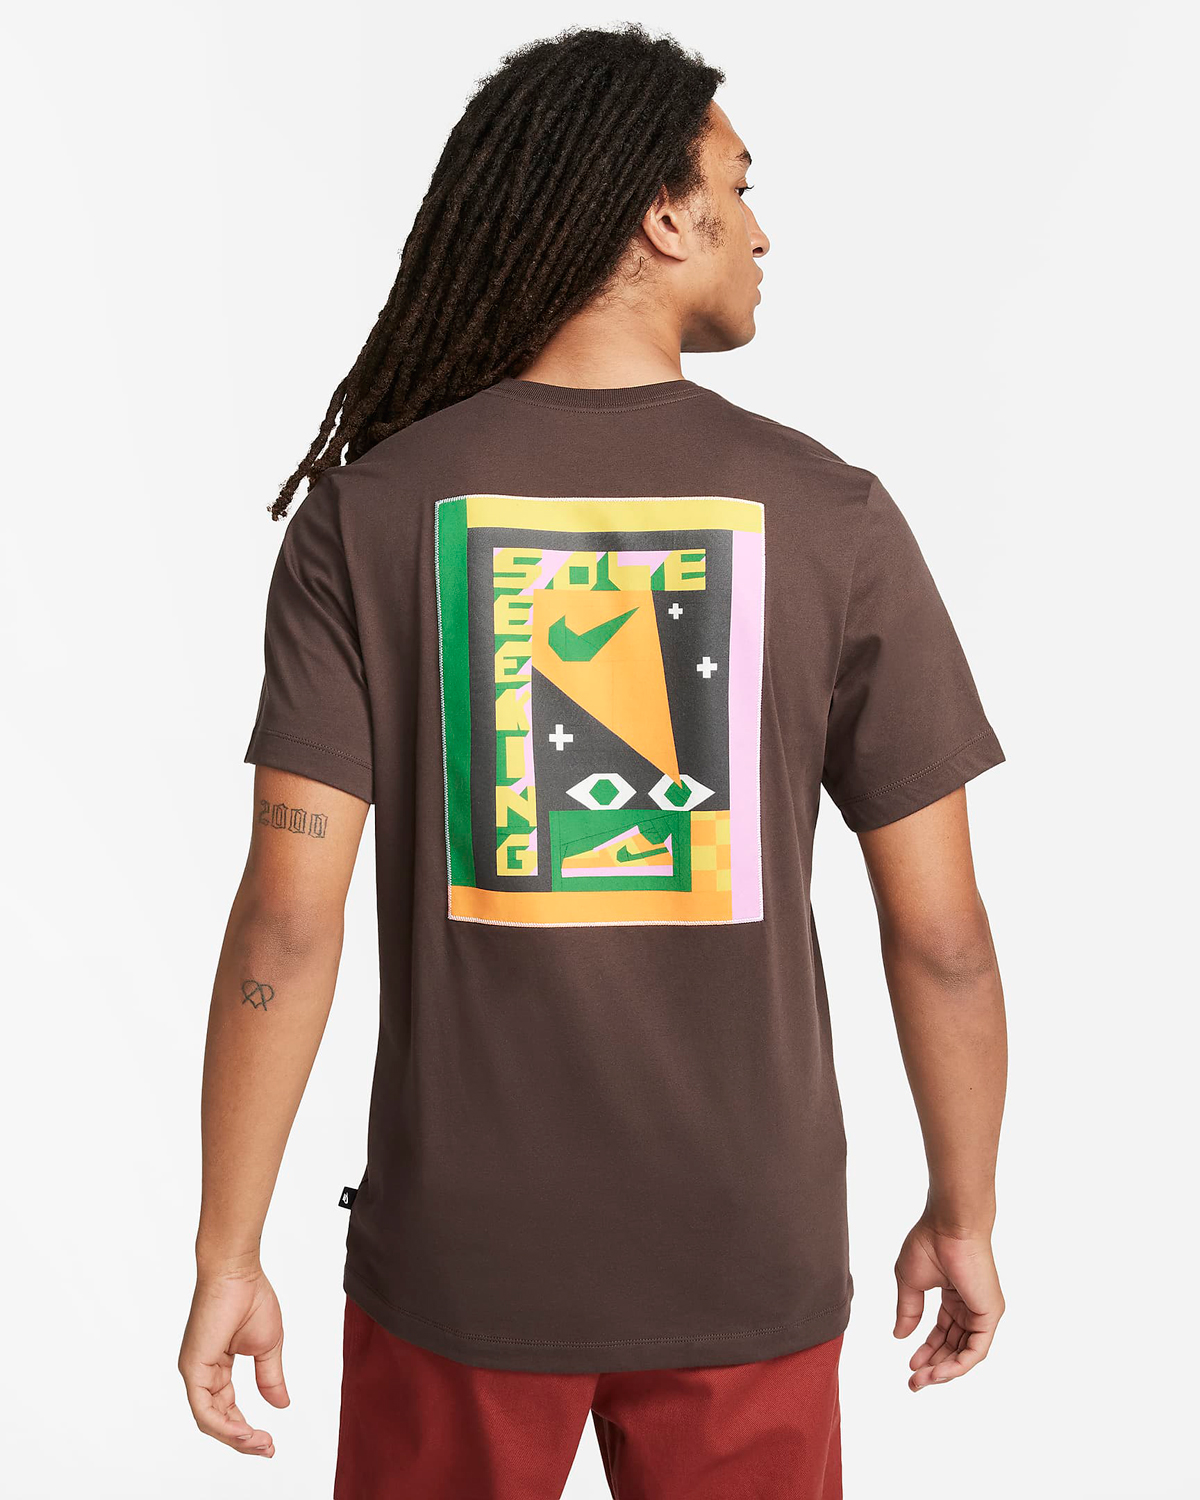 Nike-Sportswear-AF1-T-Shirt-Baroque-Brown-2